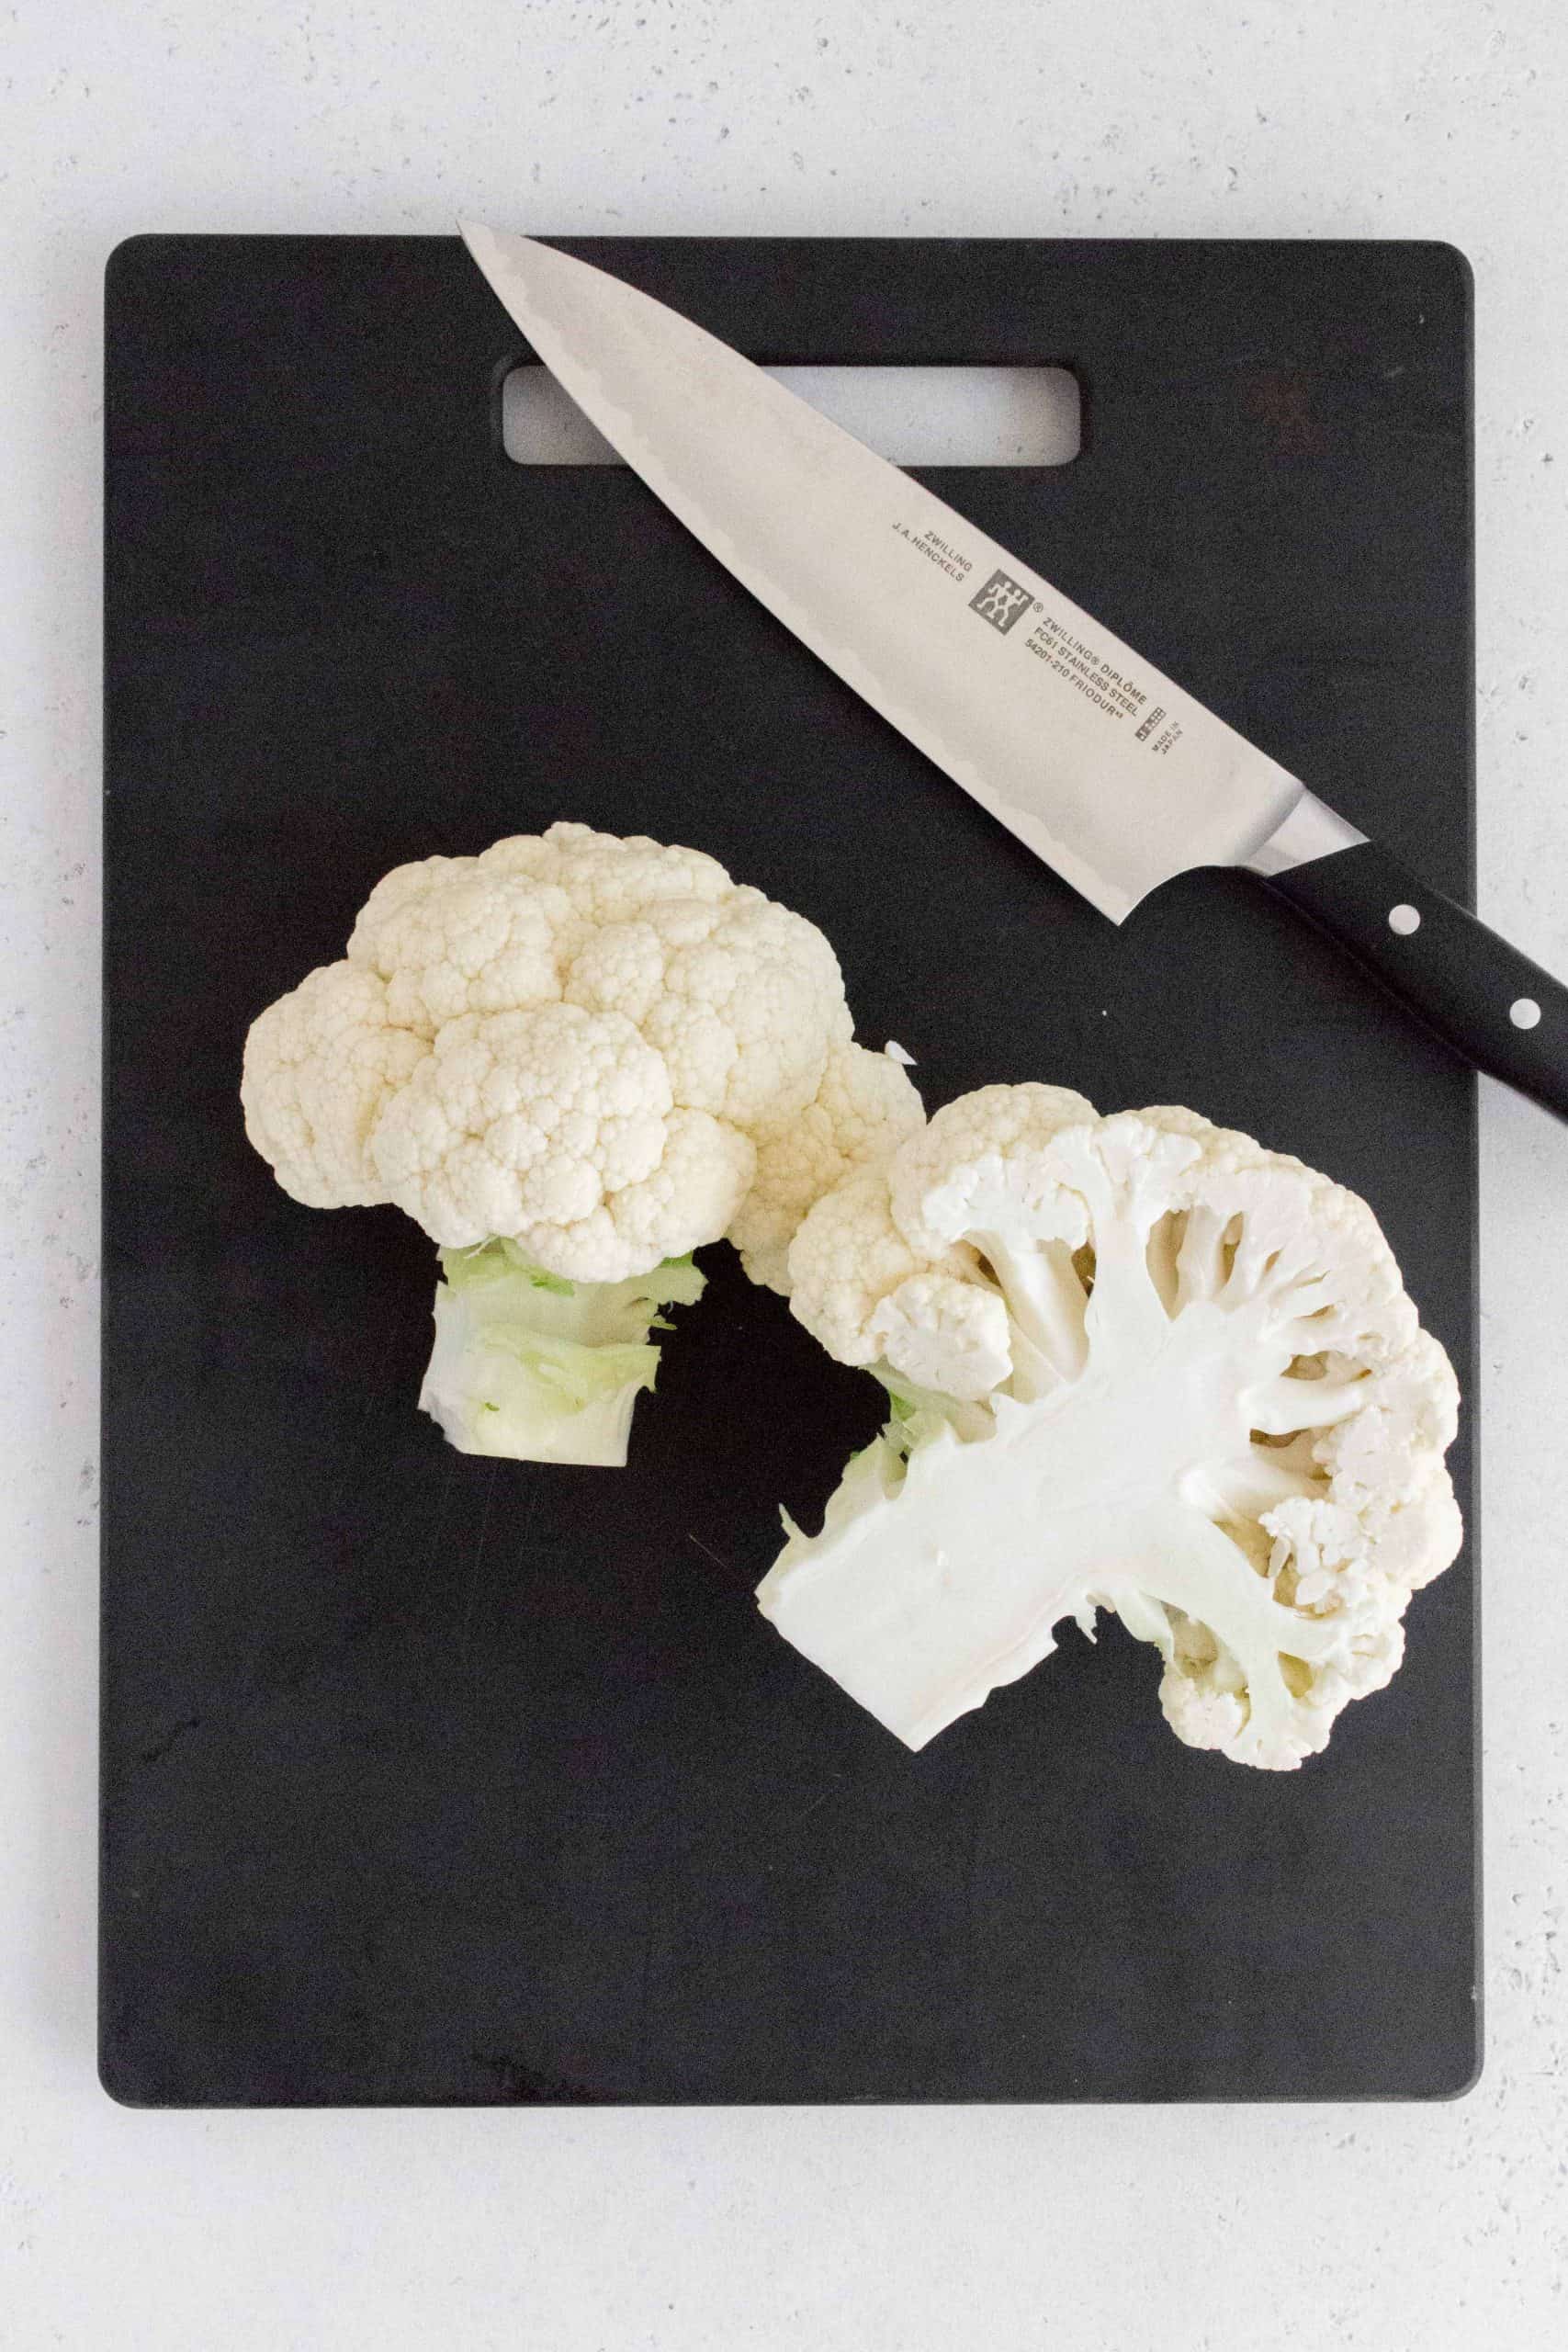 cauliflower cut in half from top to bottom